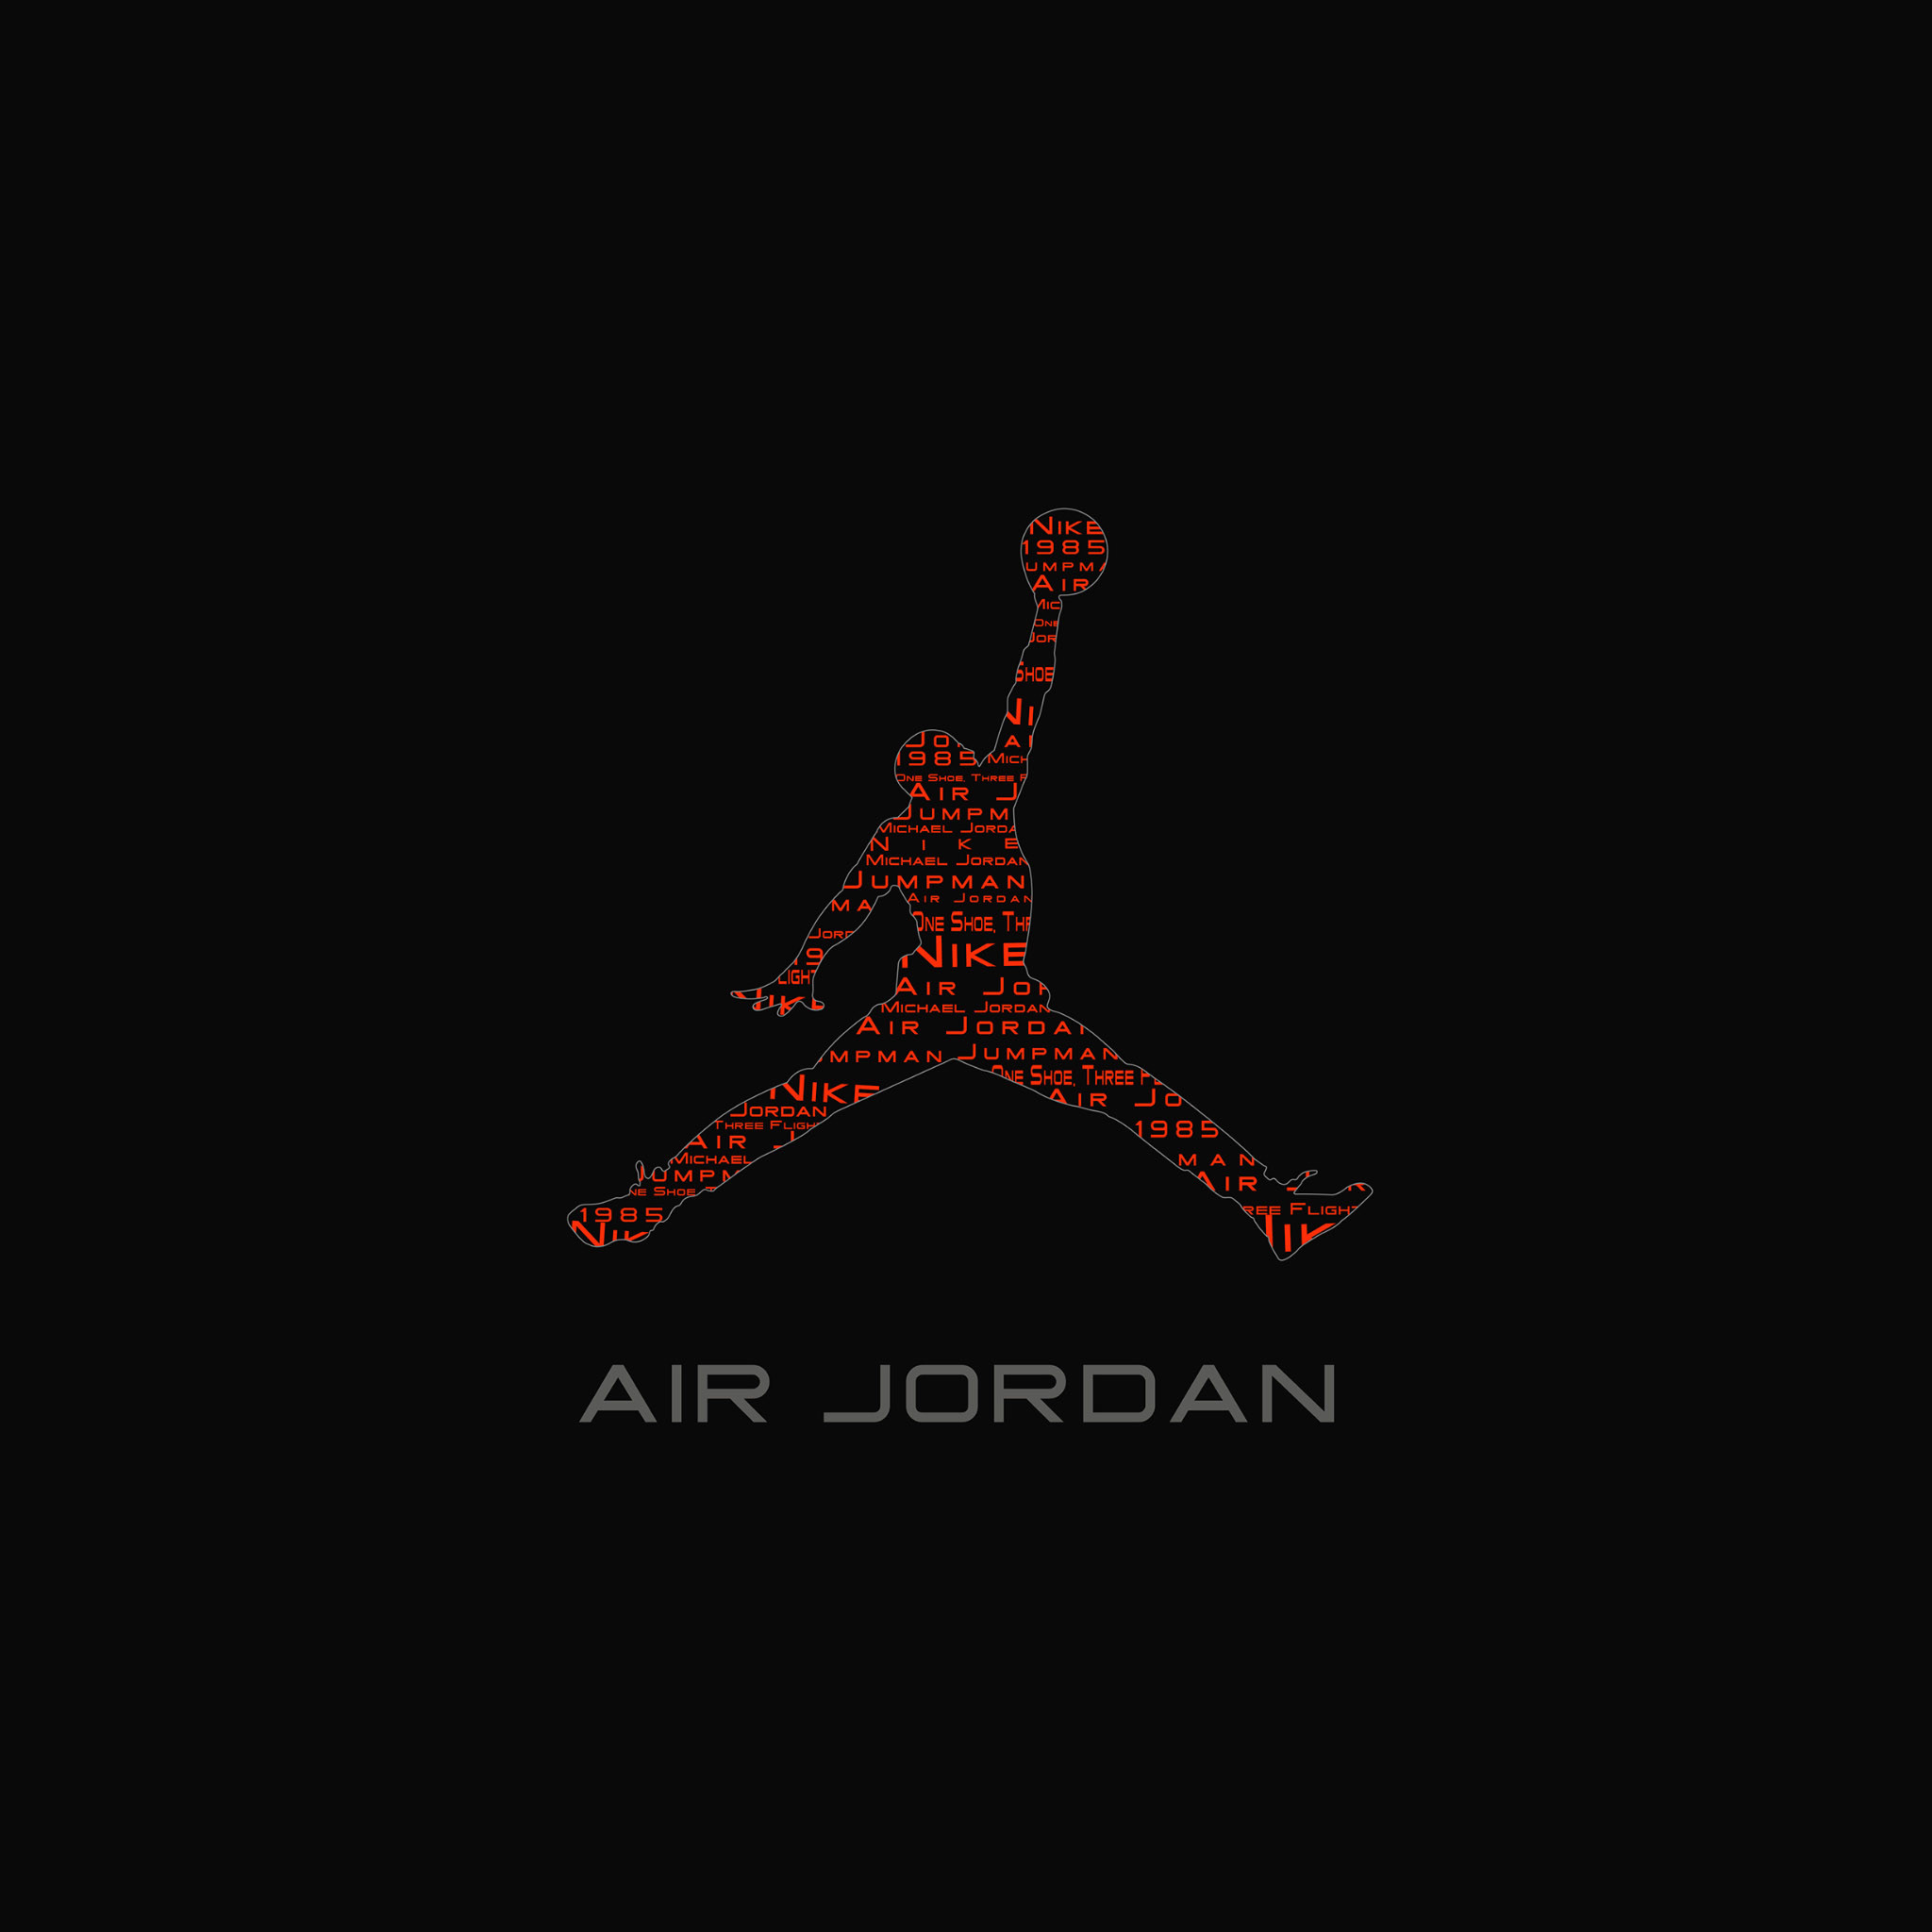 2048x2048 FREEIOS7 air jordan logo parallax HD iPhone iPad wallpaper 